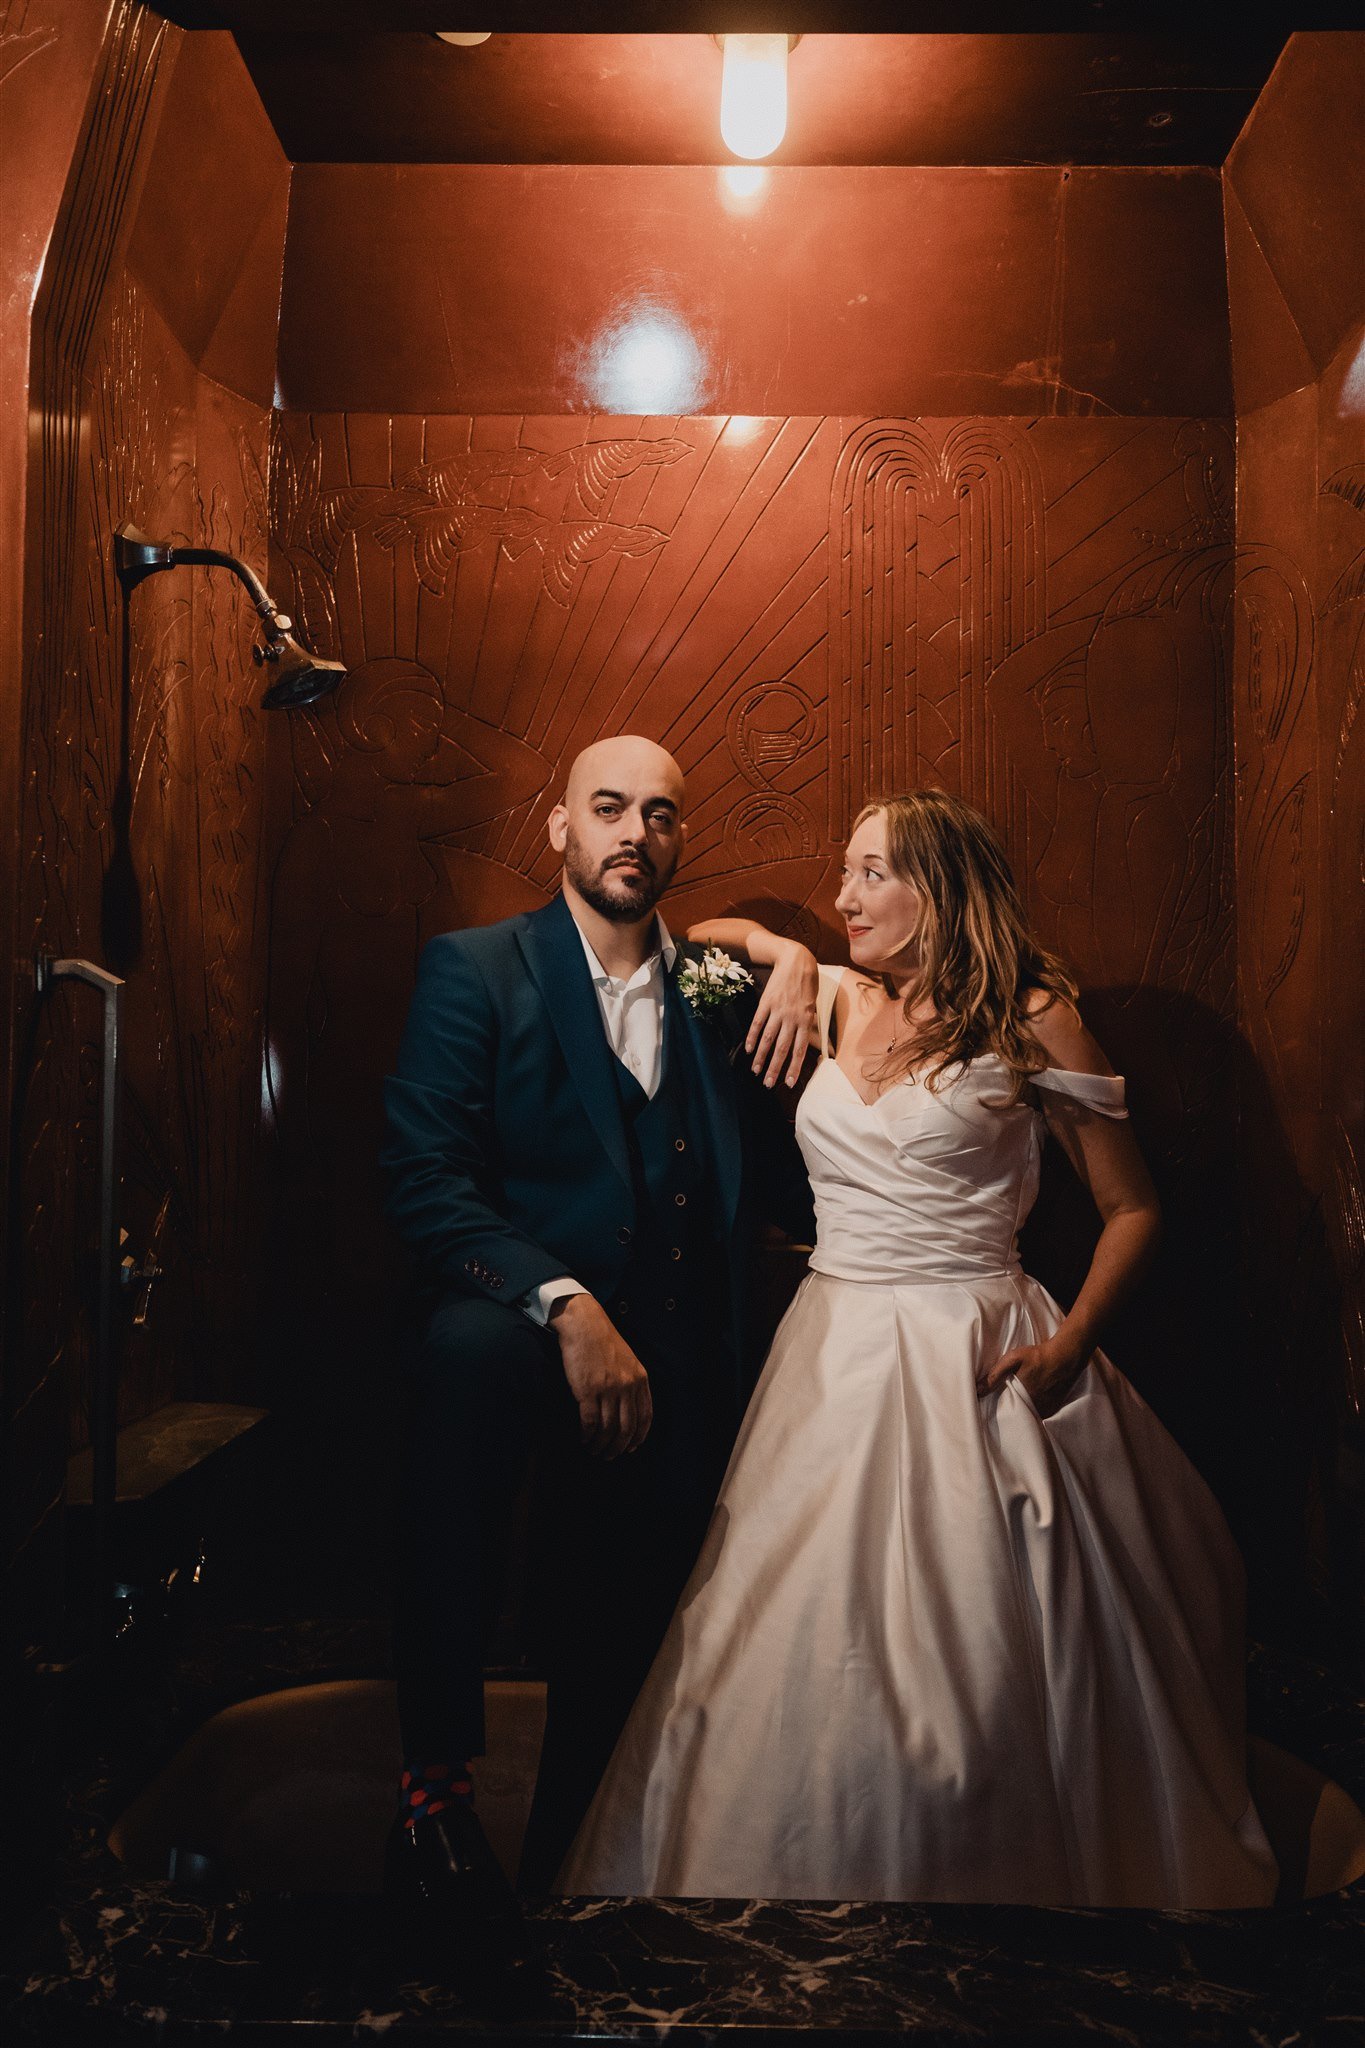 Bride and Groom Wedding Portrait at the Oviatt Penthouse, taken by Lulan Studio